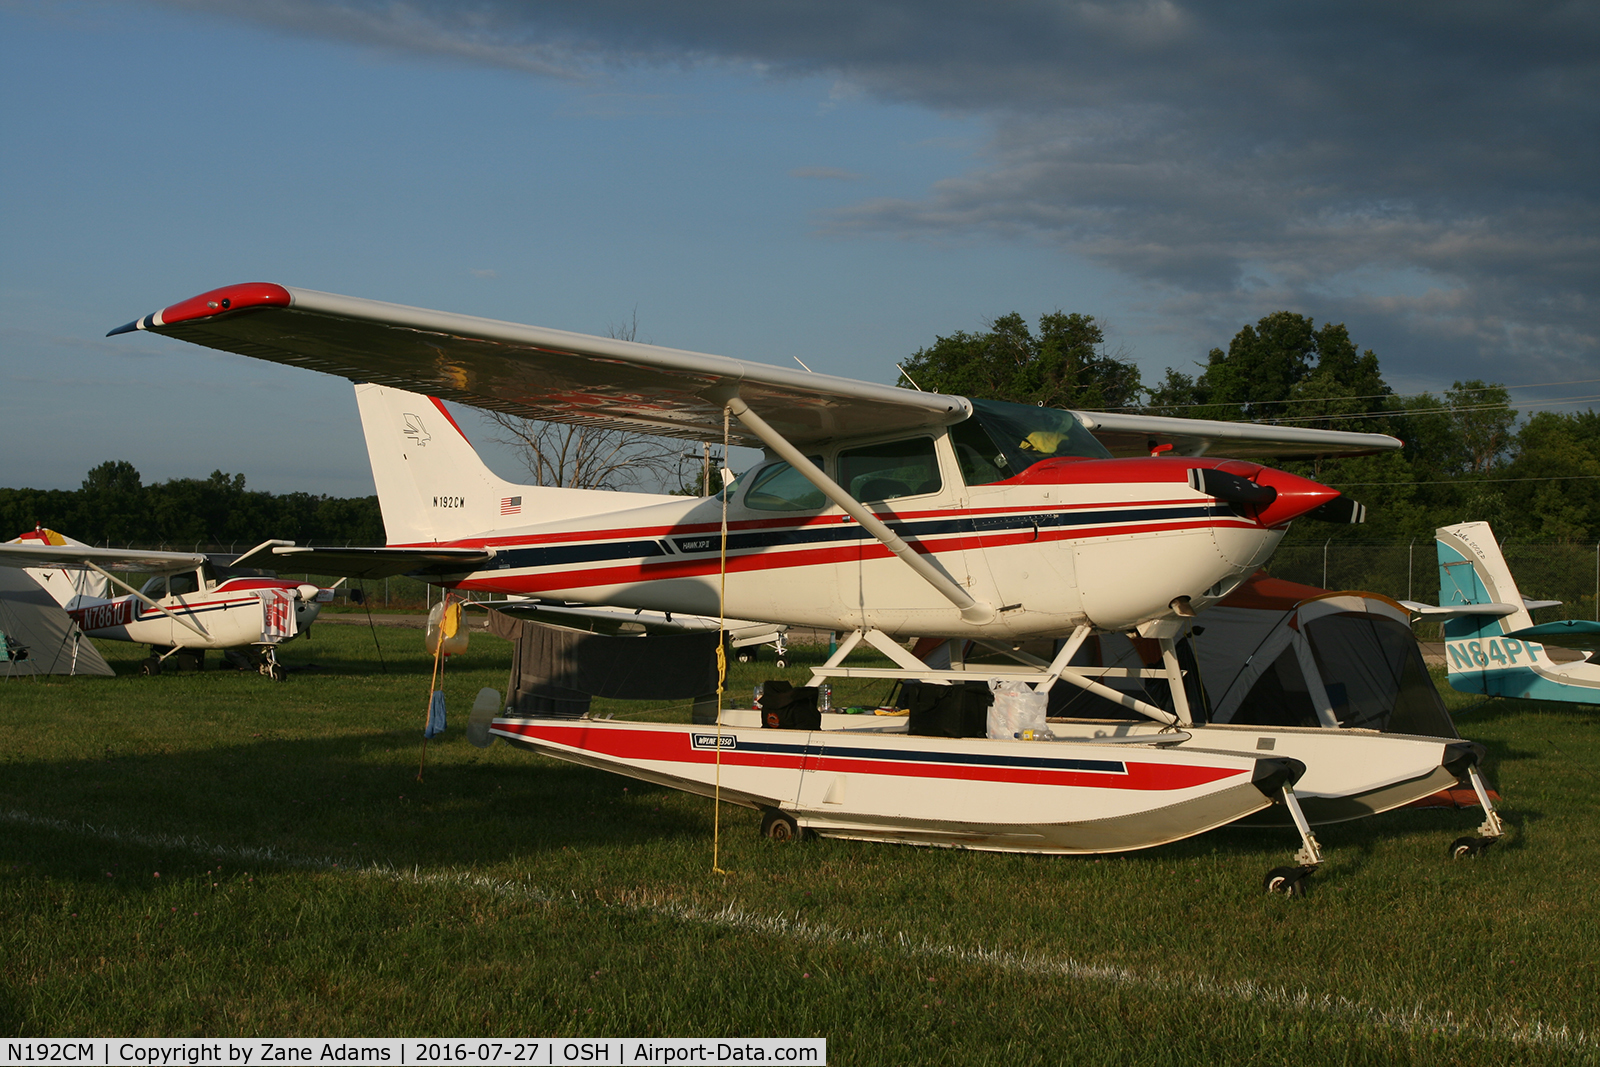 N192CM, 1981 Cessna TU206G Turbo Stationair C/N U20606160, At the 2016 EAA AirVenture - Oshkosh, Wisconsin